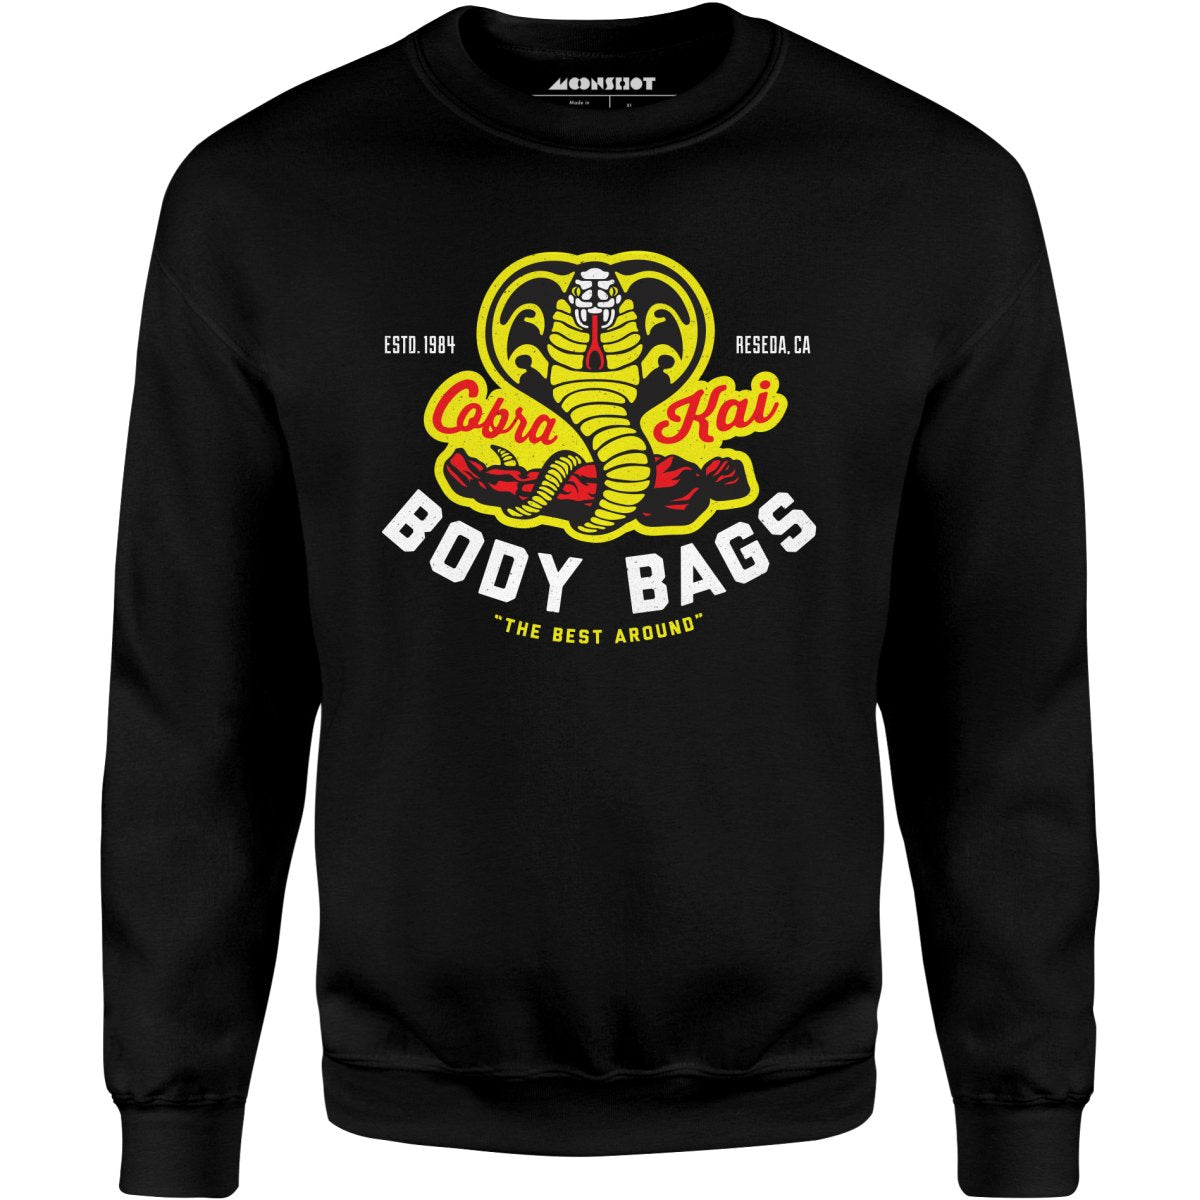 Cobra Kai Body Bags - Unisex Sweatshirt